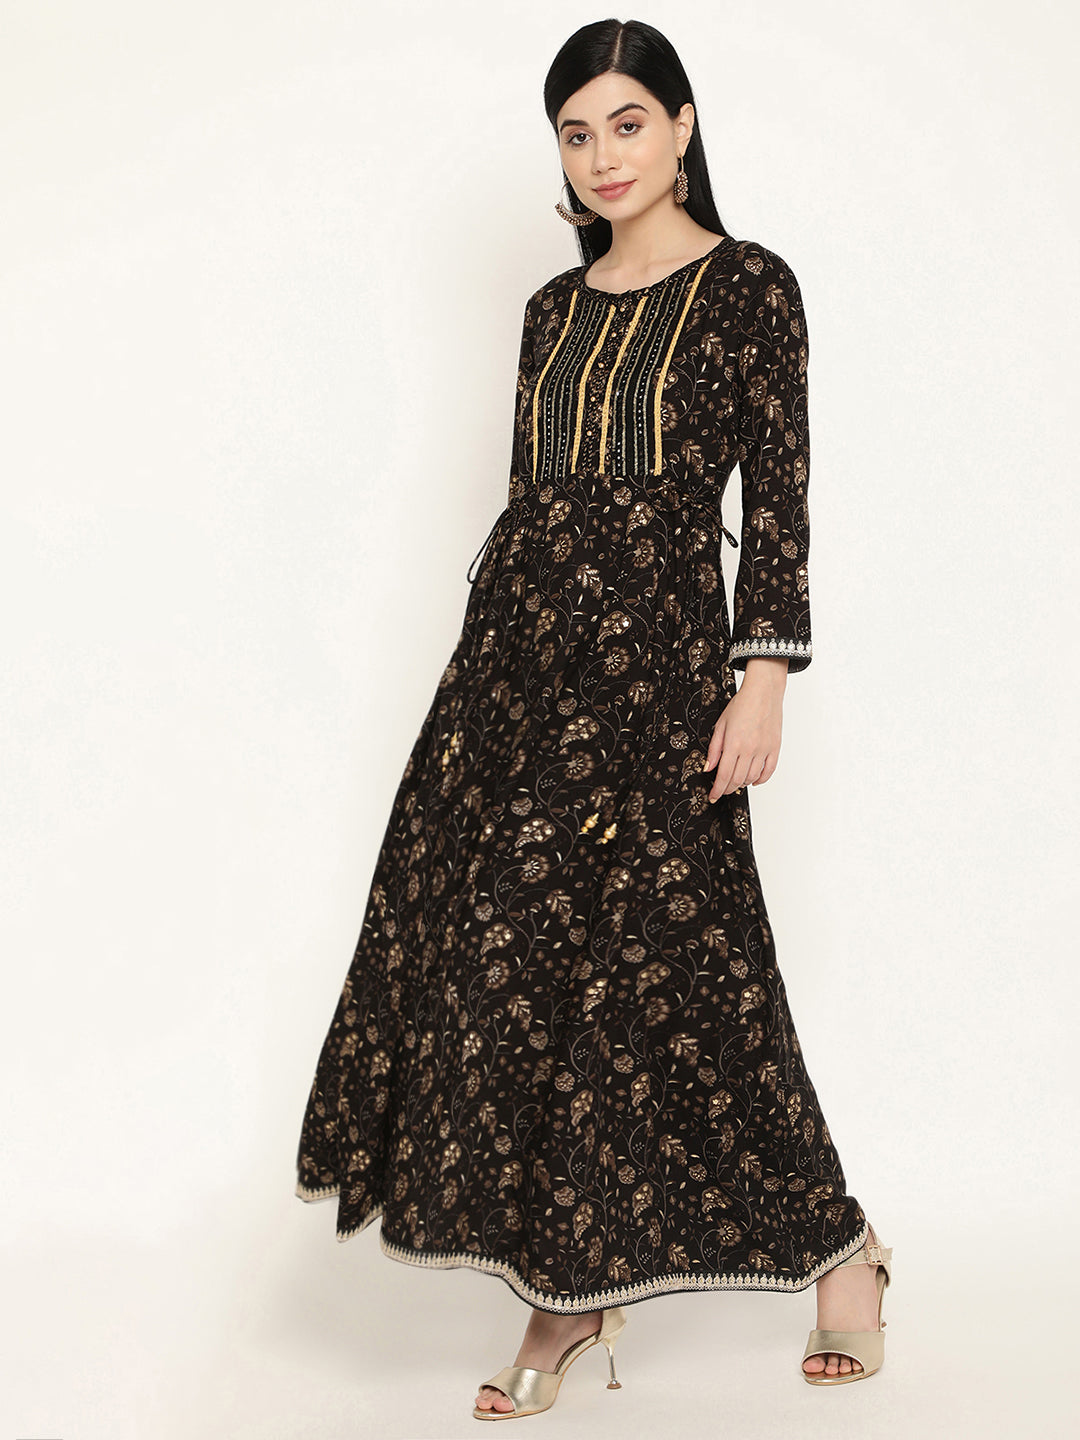 Buy Black Floral Print Long Dress Online - RK India Store View